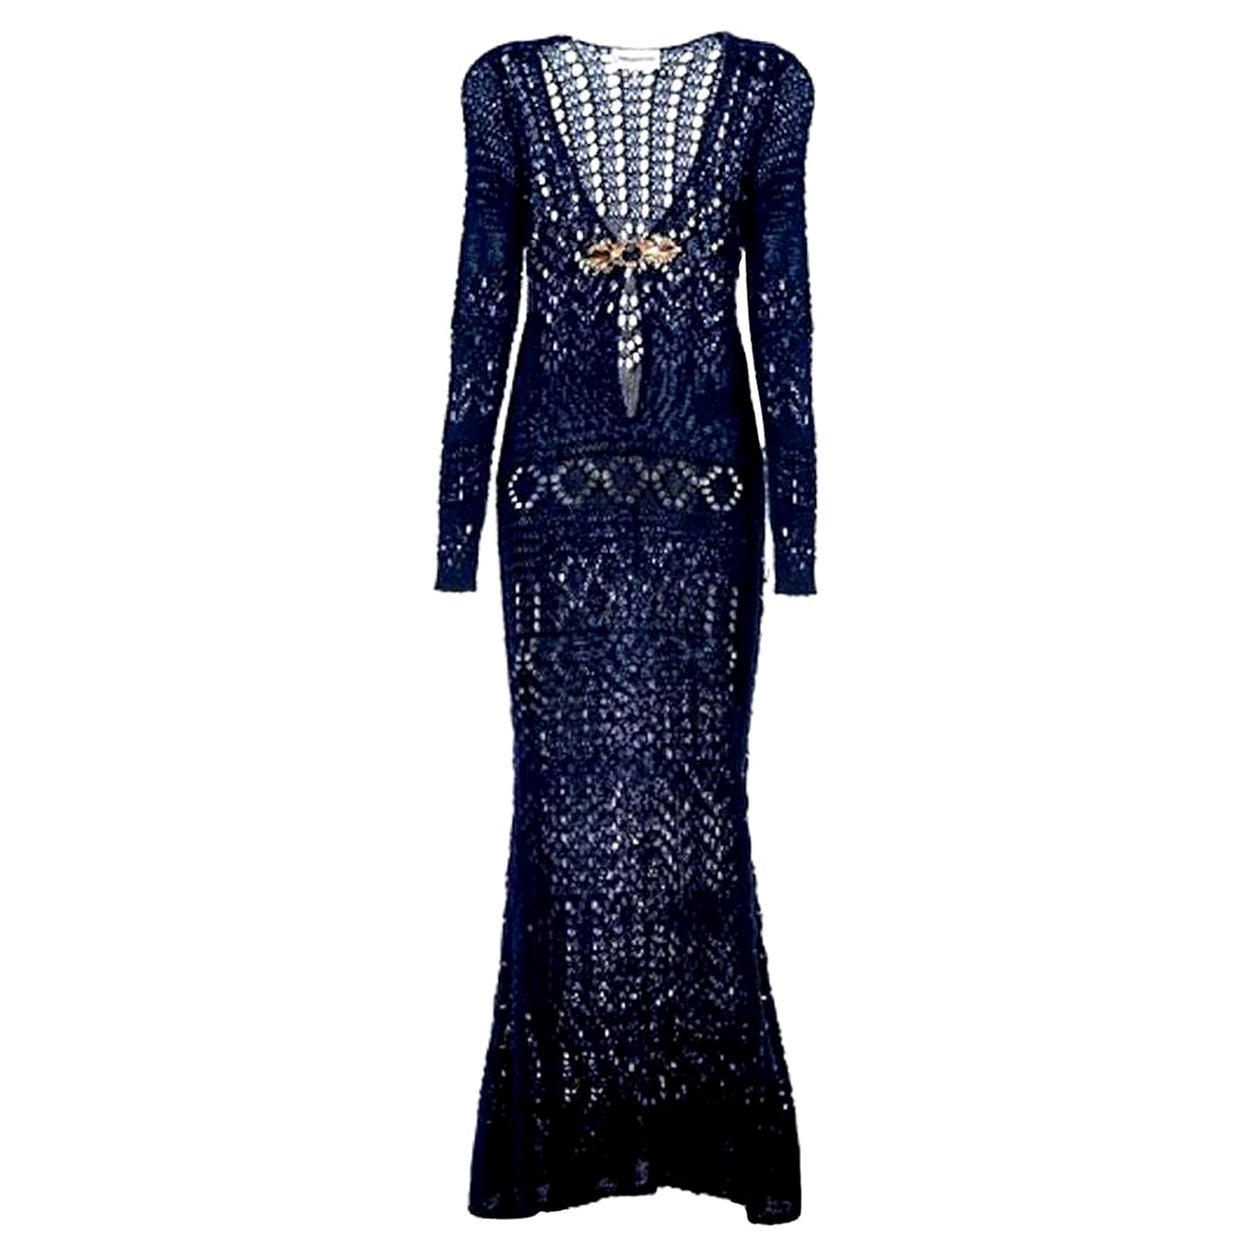 UNWORN Emilio Pucci by Peter Dundas 2011 Navy Crochet Knit Maxi Dress Gown 42 For Sale